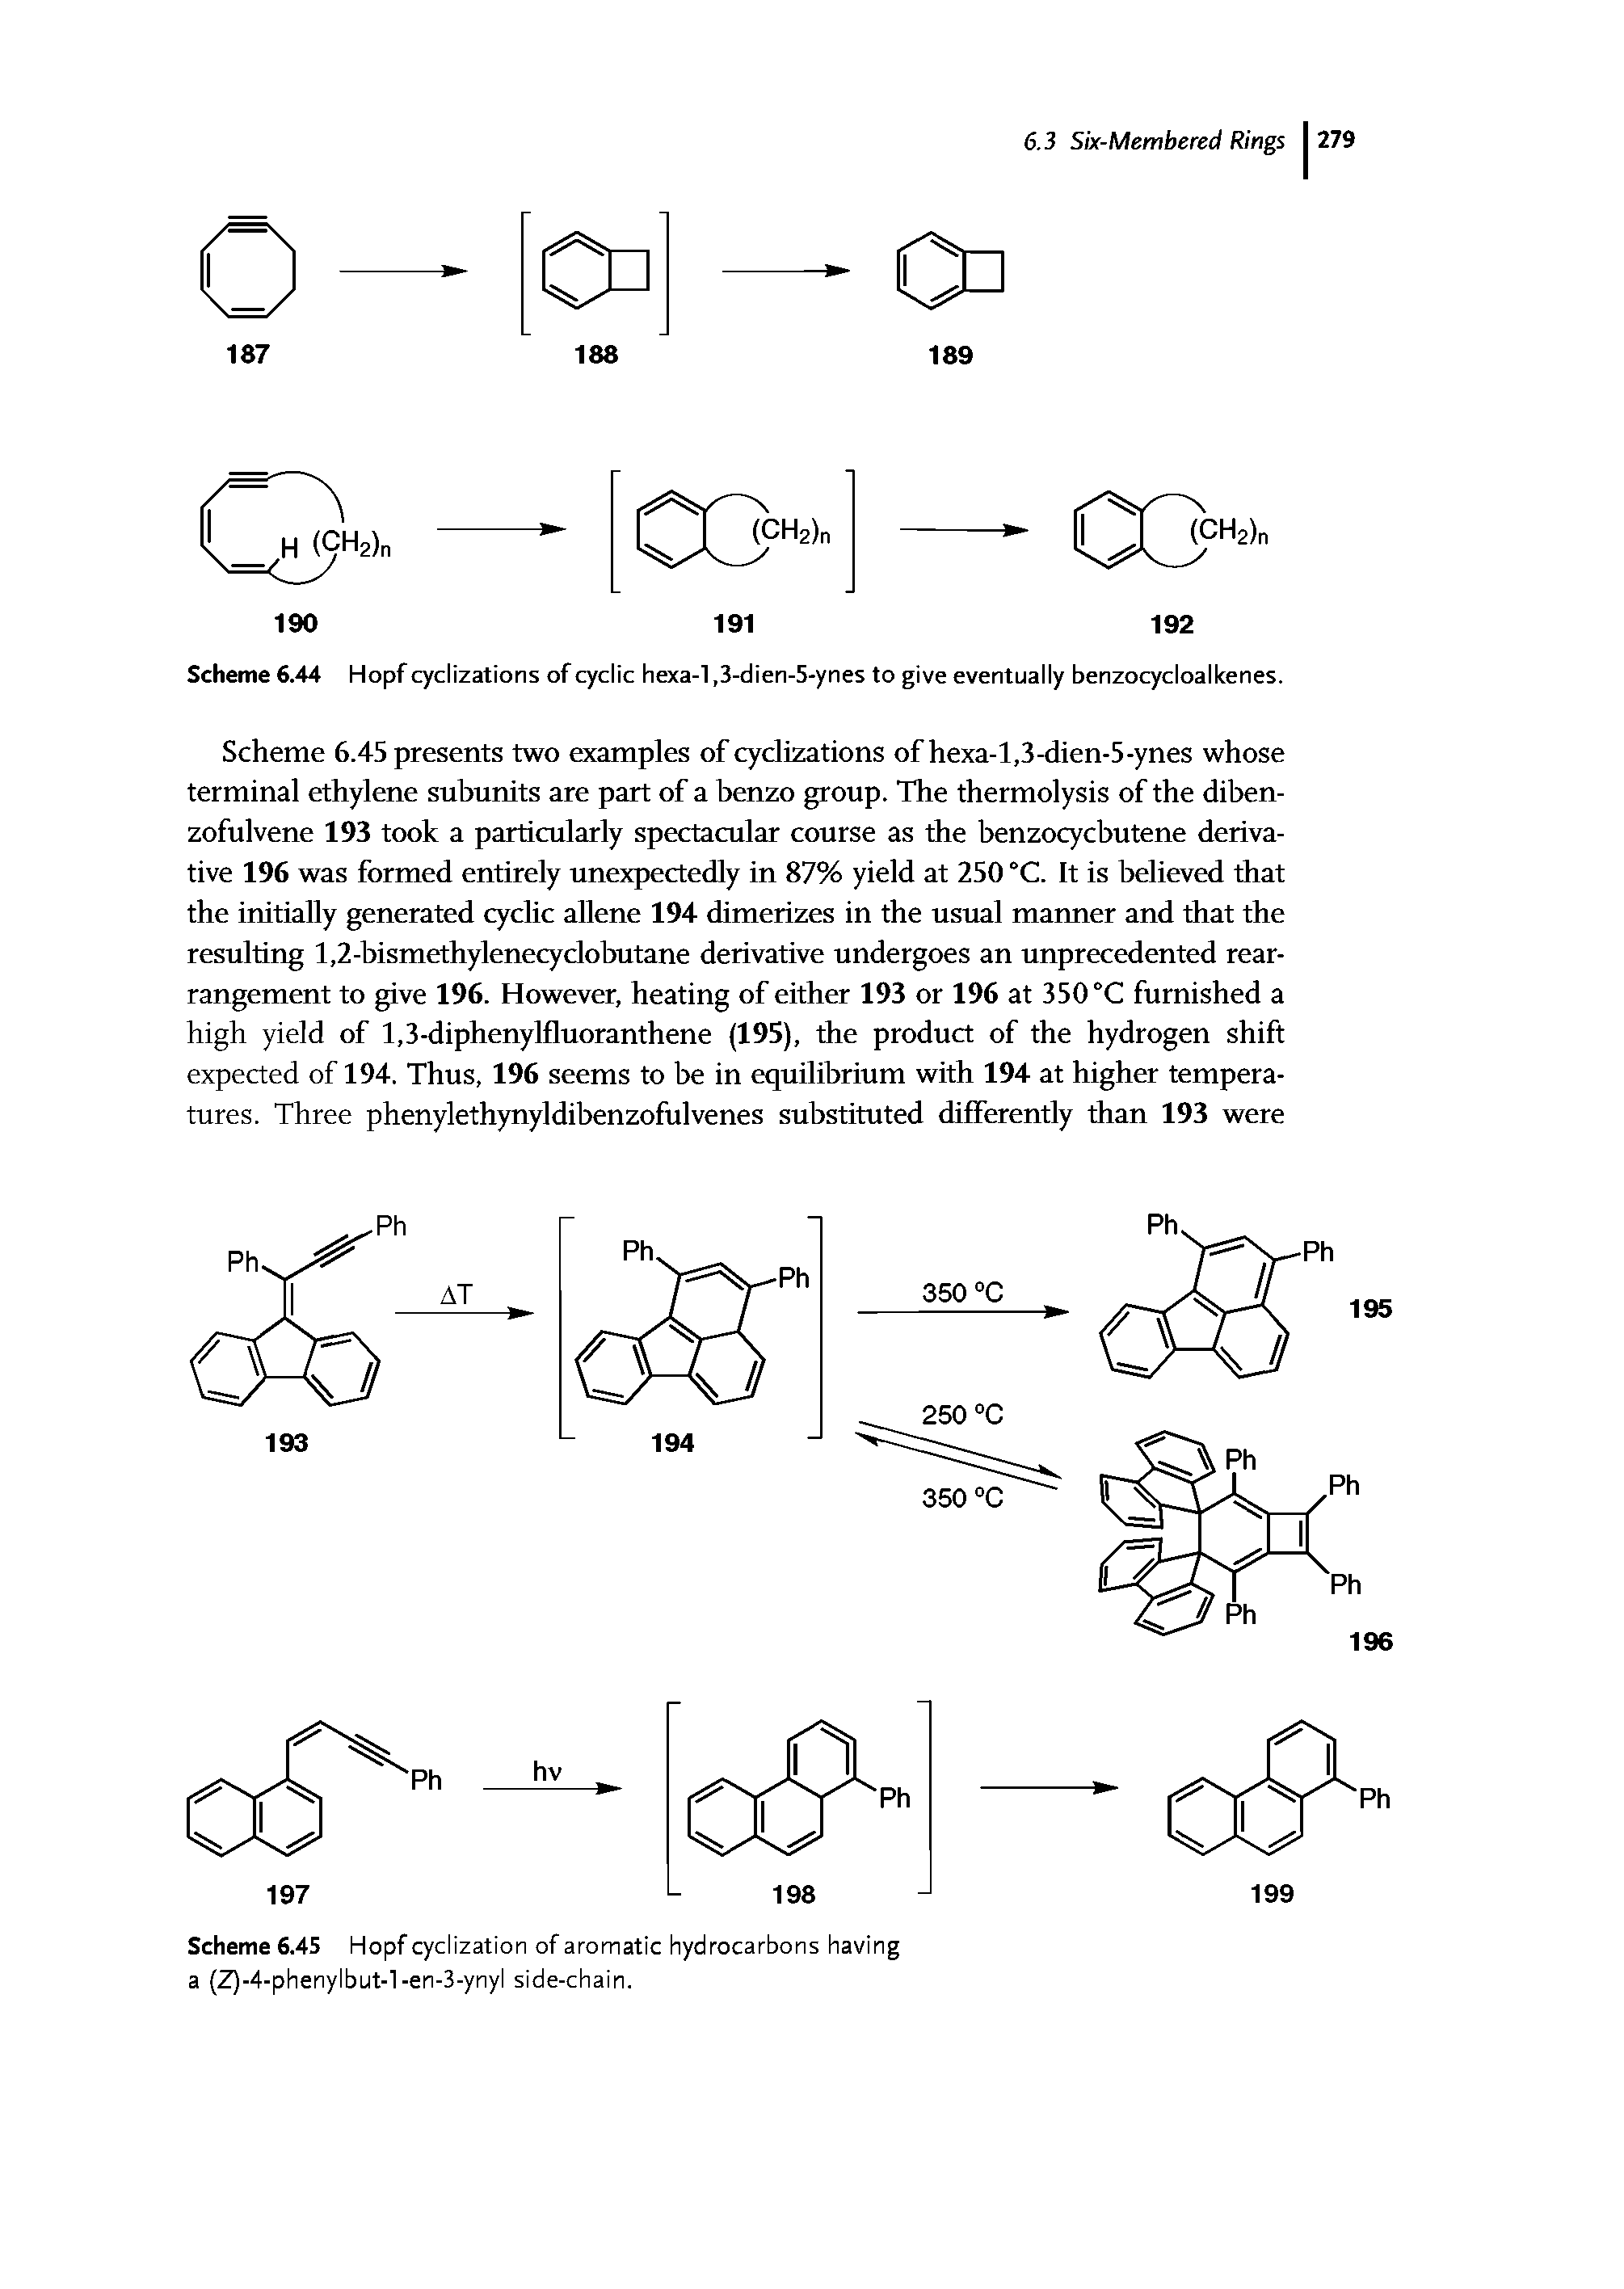 Scheme 6.45 Hopf cyclization of aromatic hydrocarbons having a (Z)-4-phenylbut-l-en-3-ynyl side-chain.